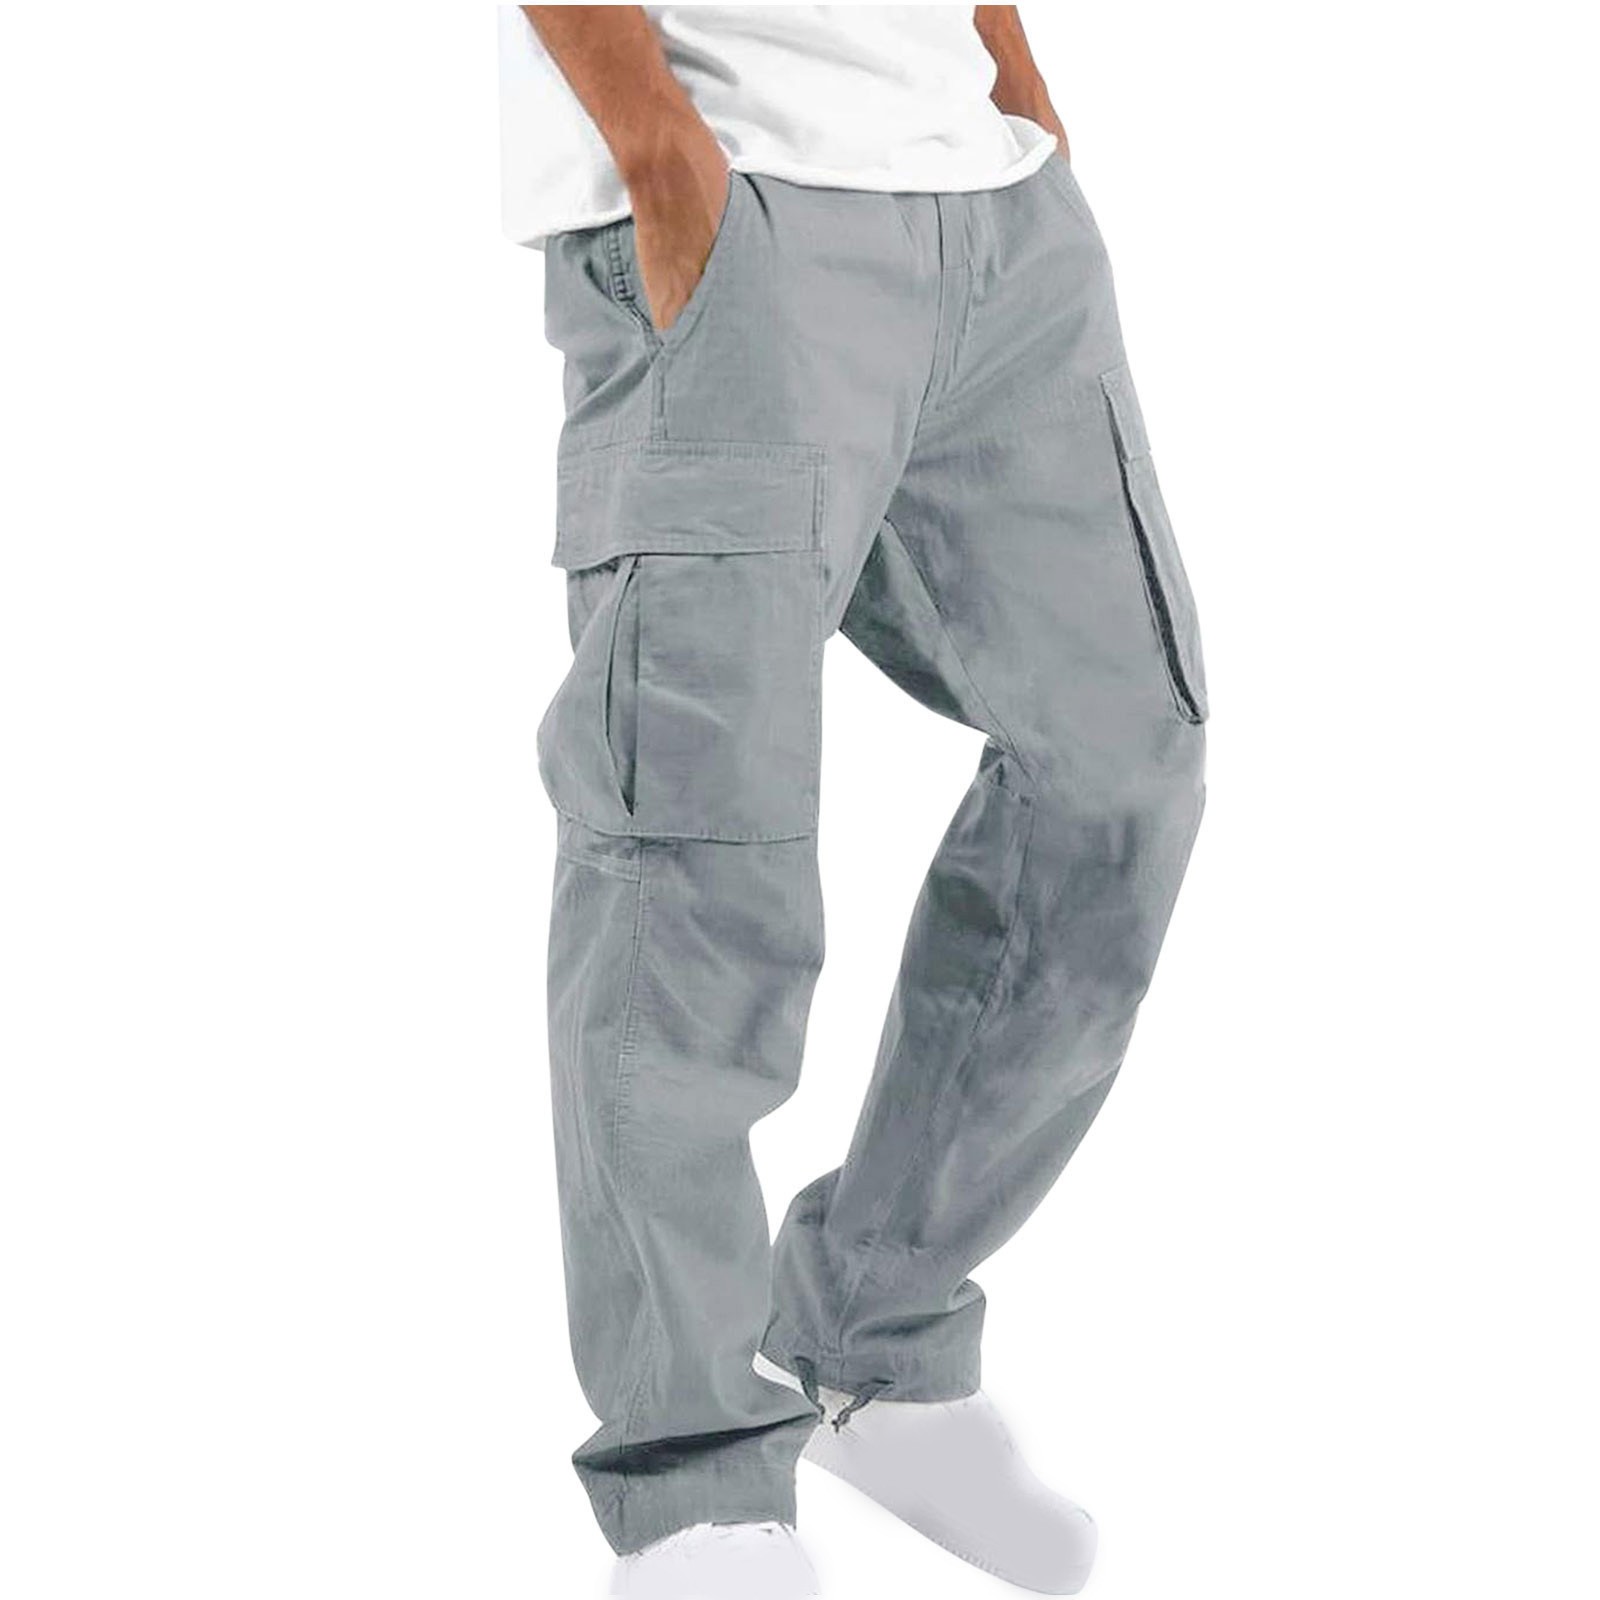 Erwazi Men's Fashion Cargo Hiking Pants Drawstring Joggers Pants ...